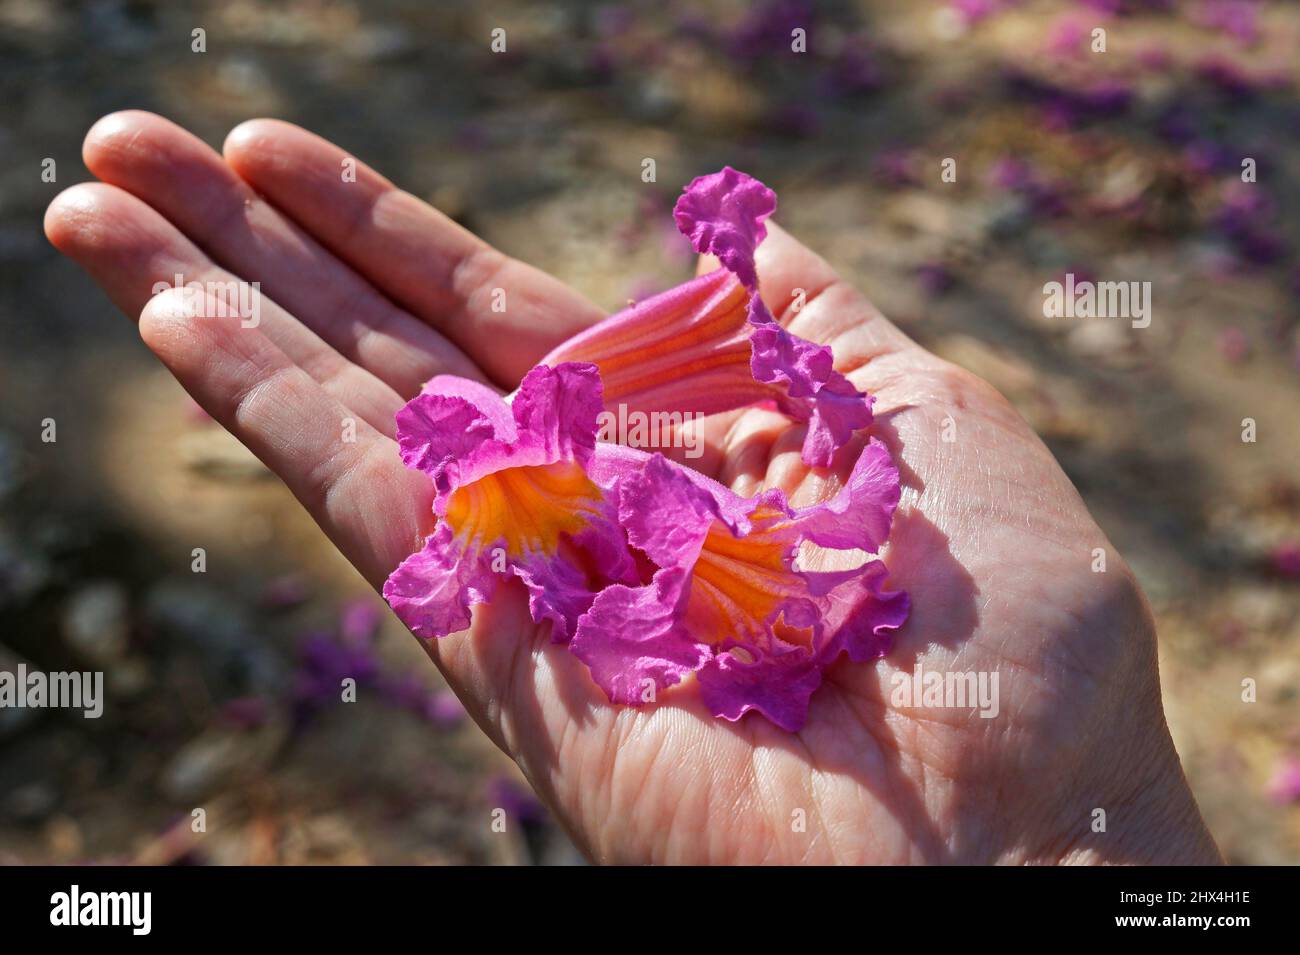 Pink ipe or pink trumpet tree flowers, (Handroanthus impetiginosus) on hand Stock Photo